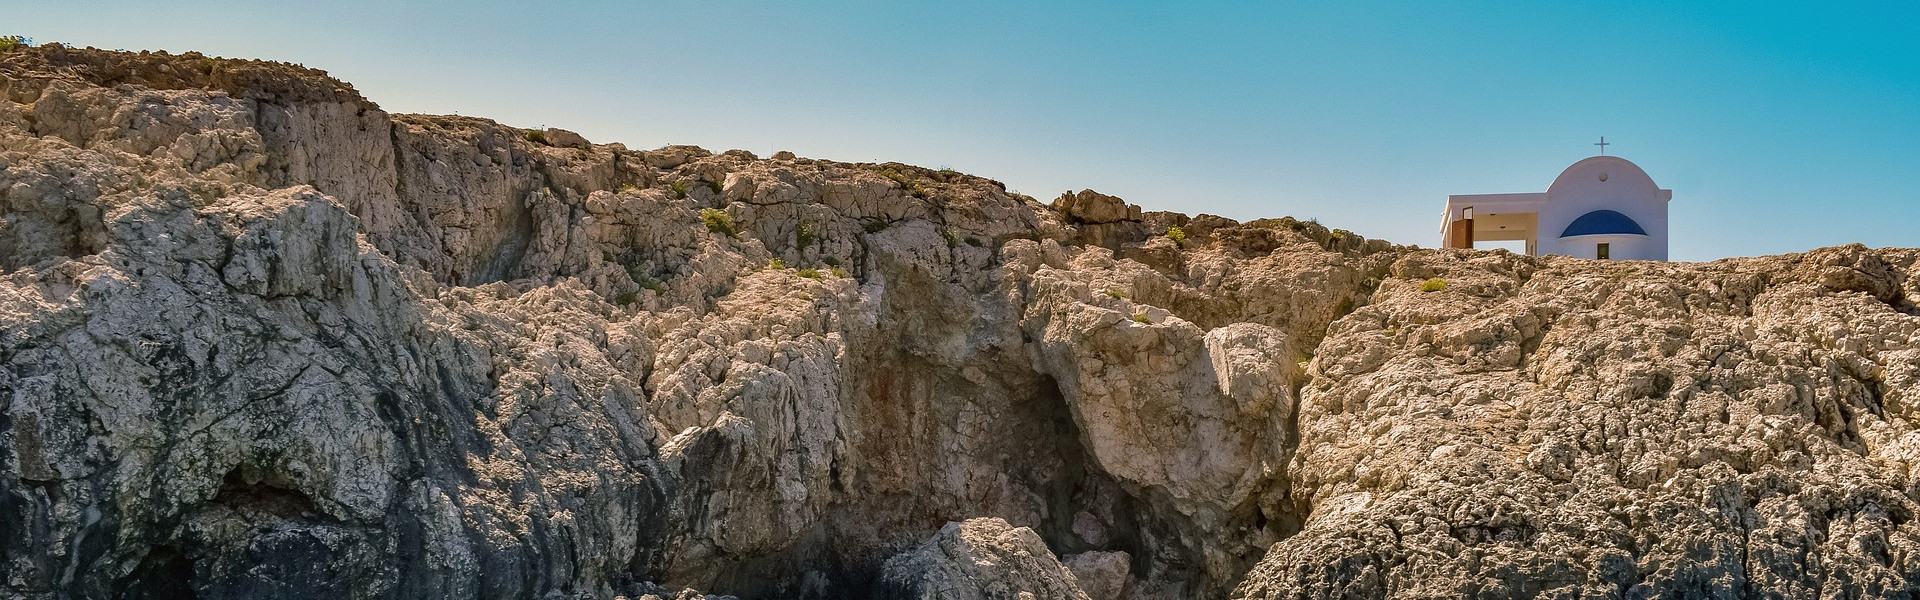 Destination image of Cyprus